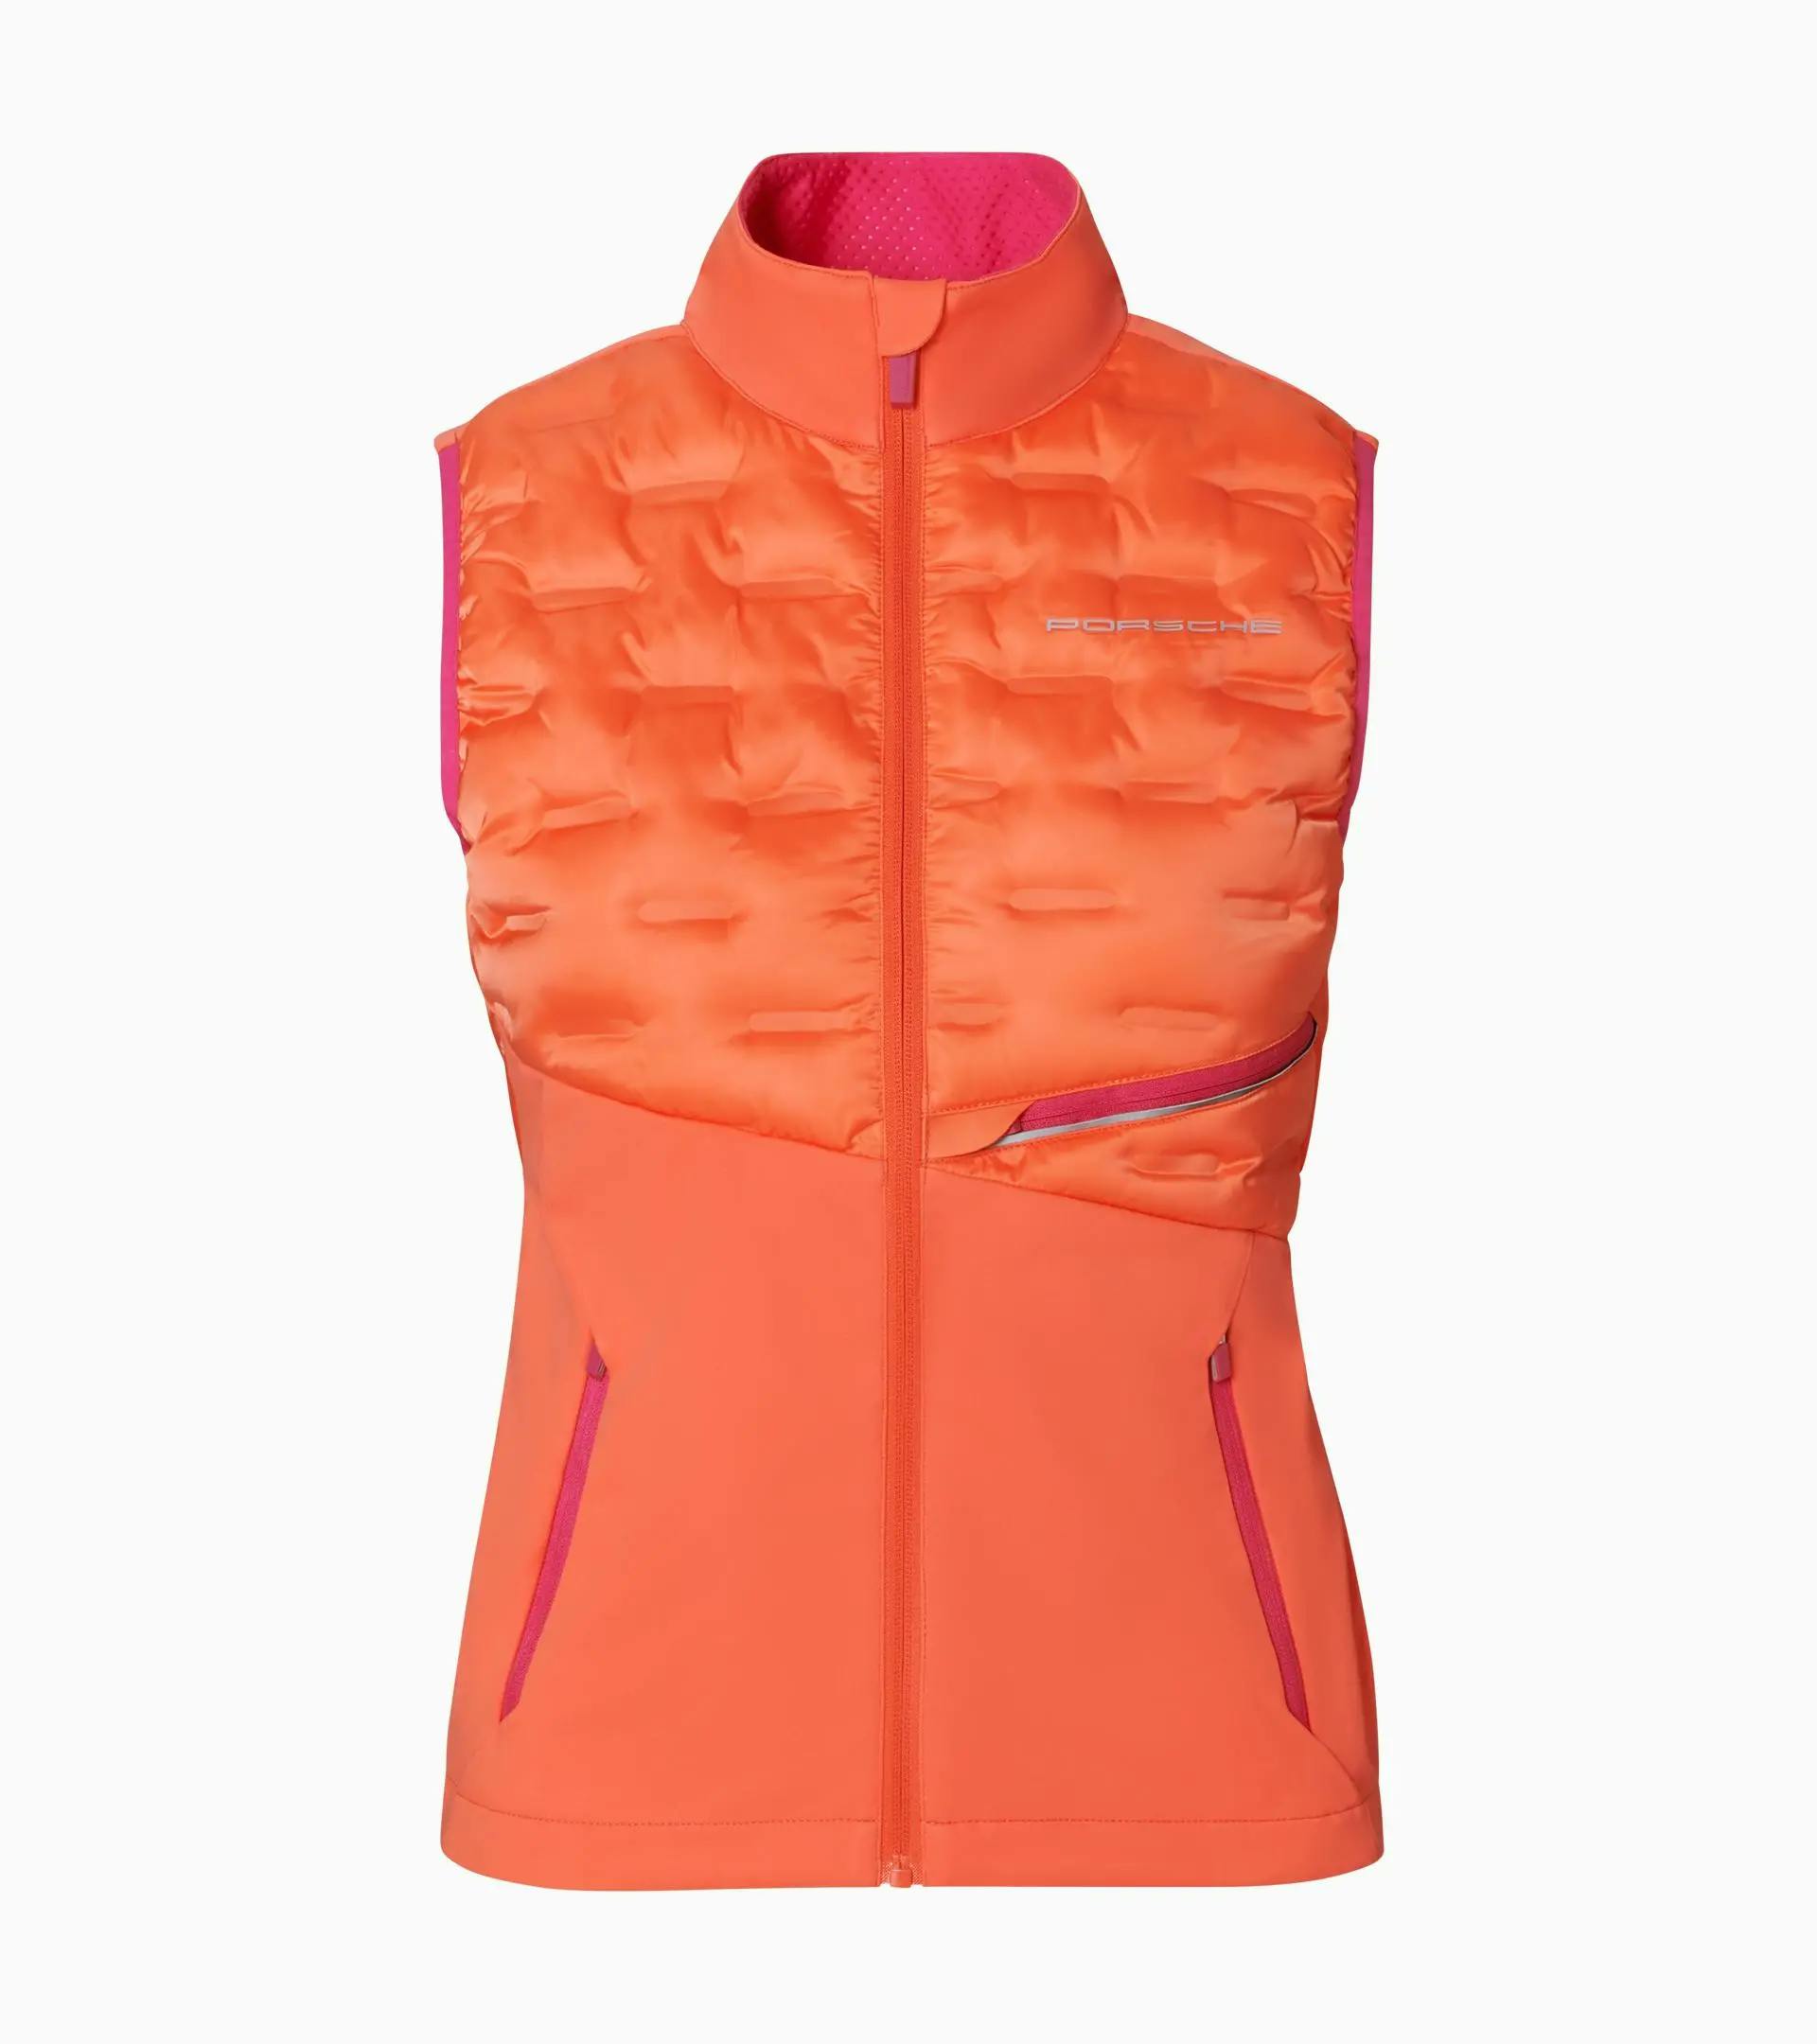 Women's vest – Sport thumbnail 0